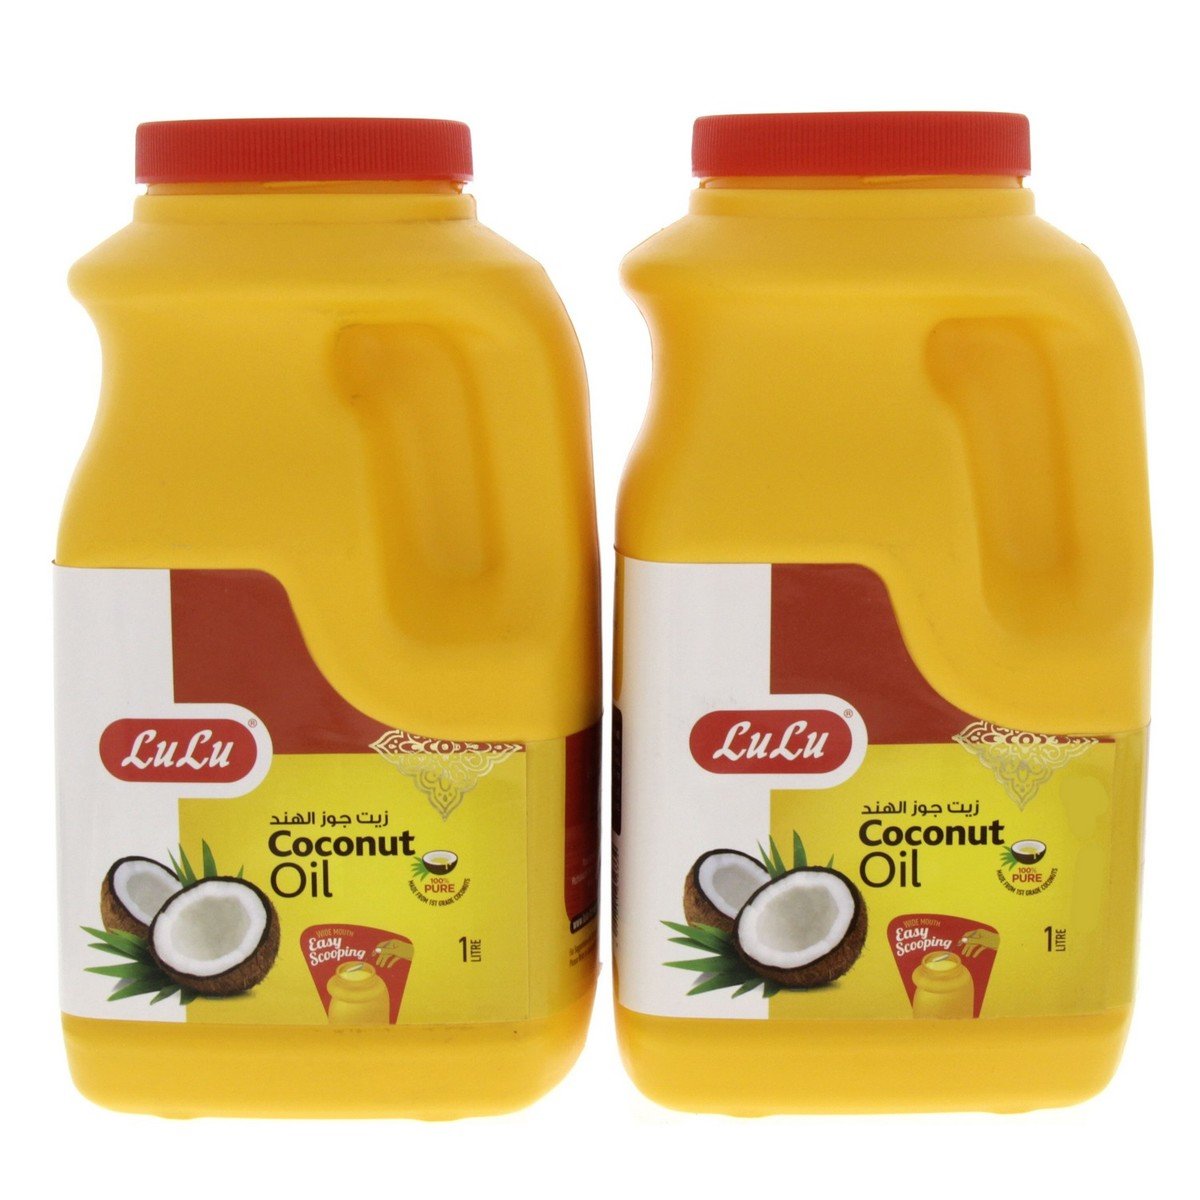 LuLu Coconut Oil Value Pack 2 x 1Litre